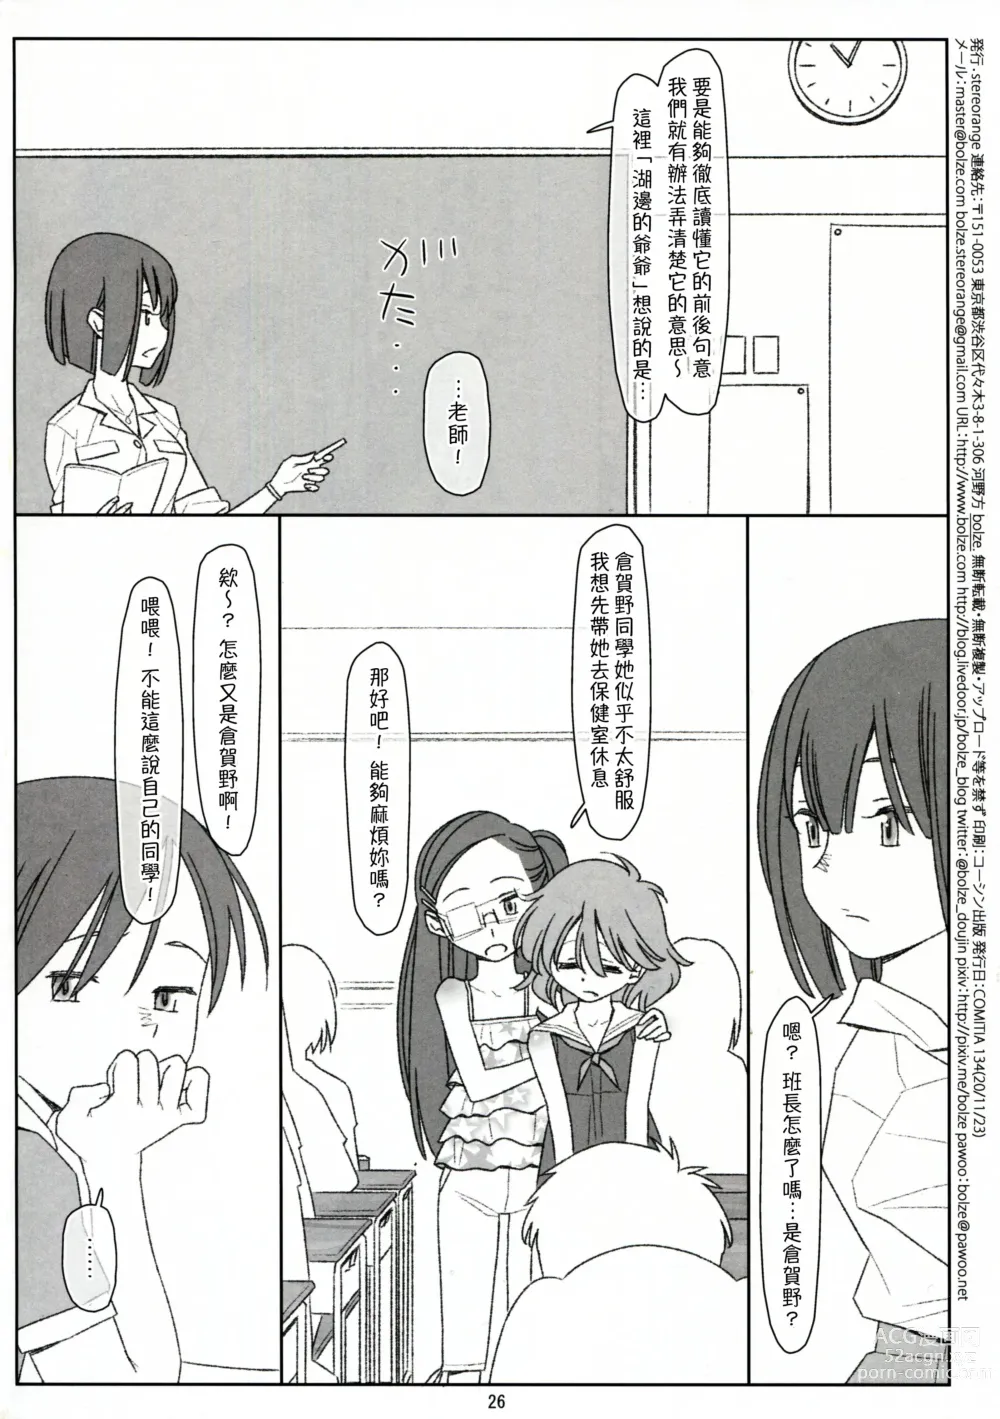 Page 54 of doujinshi Bokutachi no Super App ③ + ④